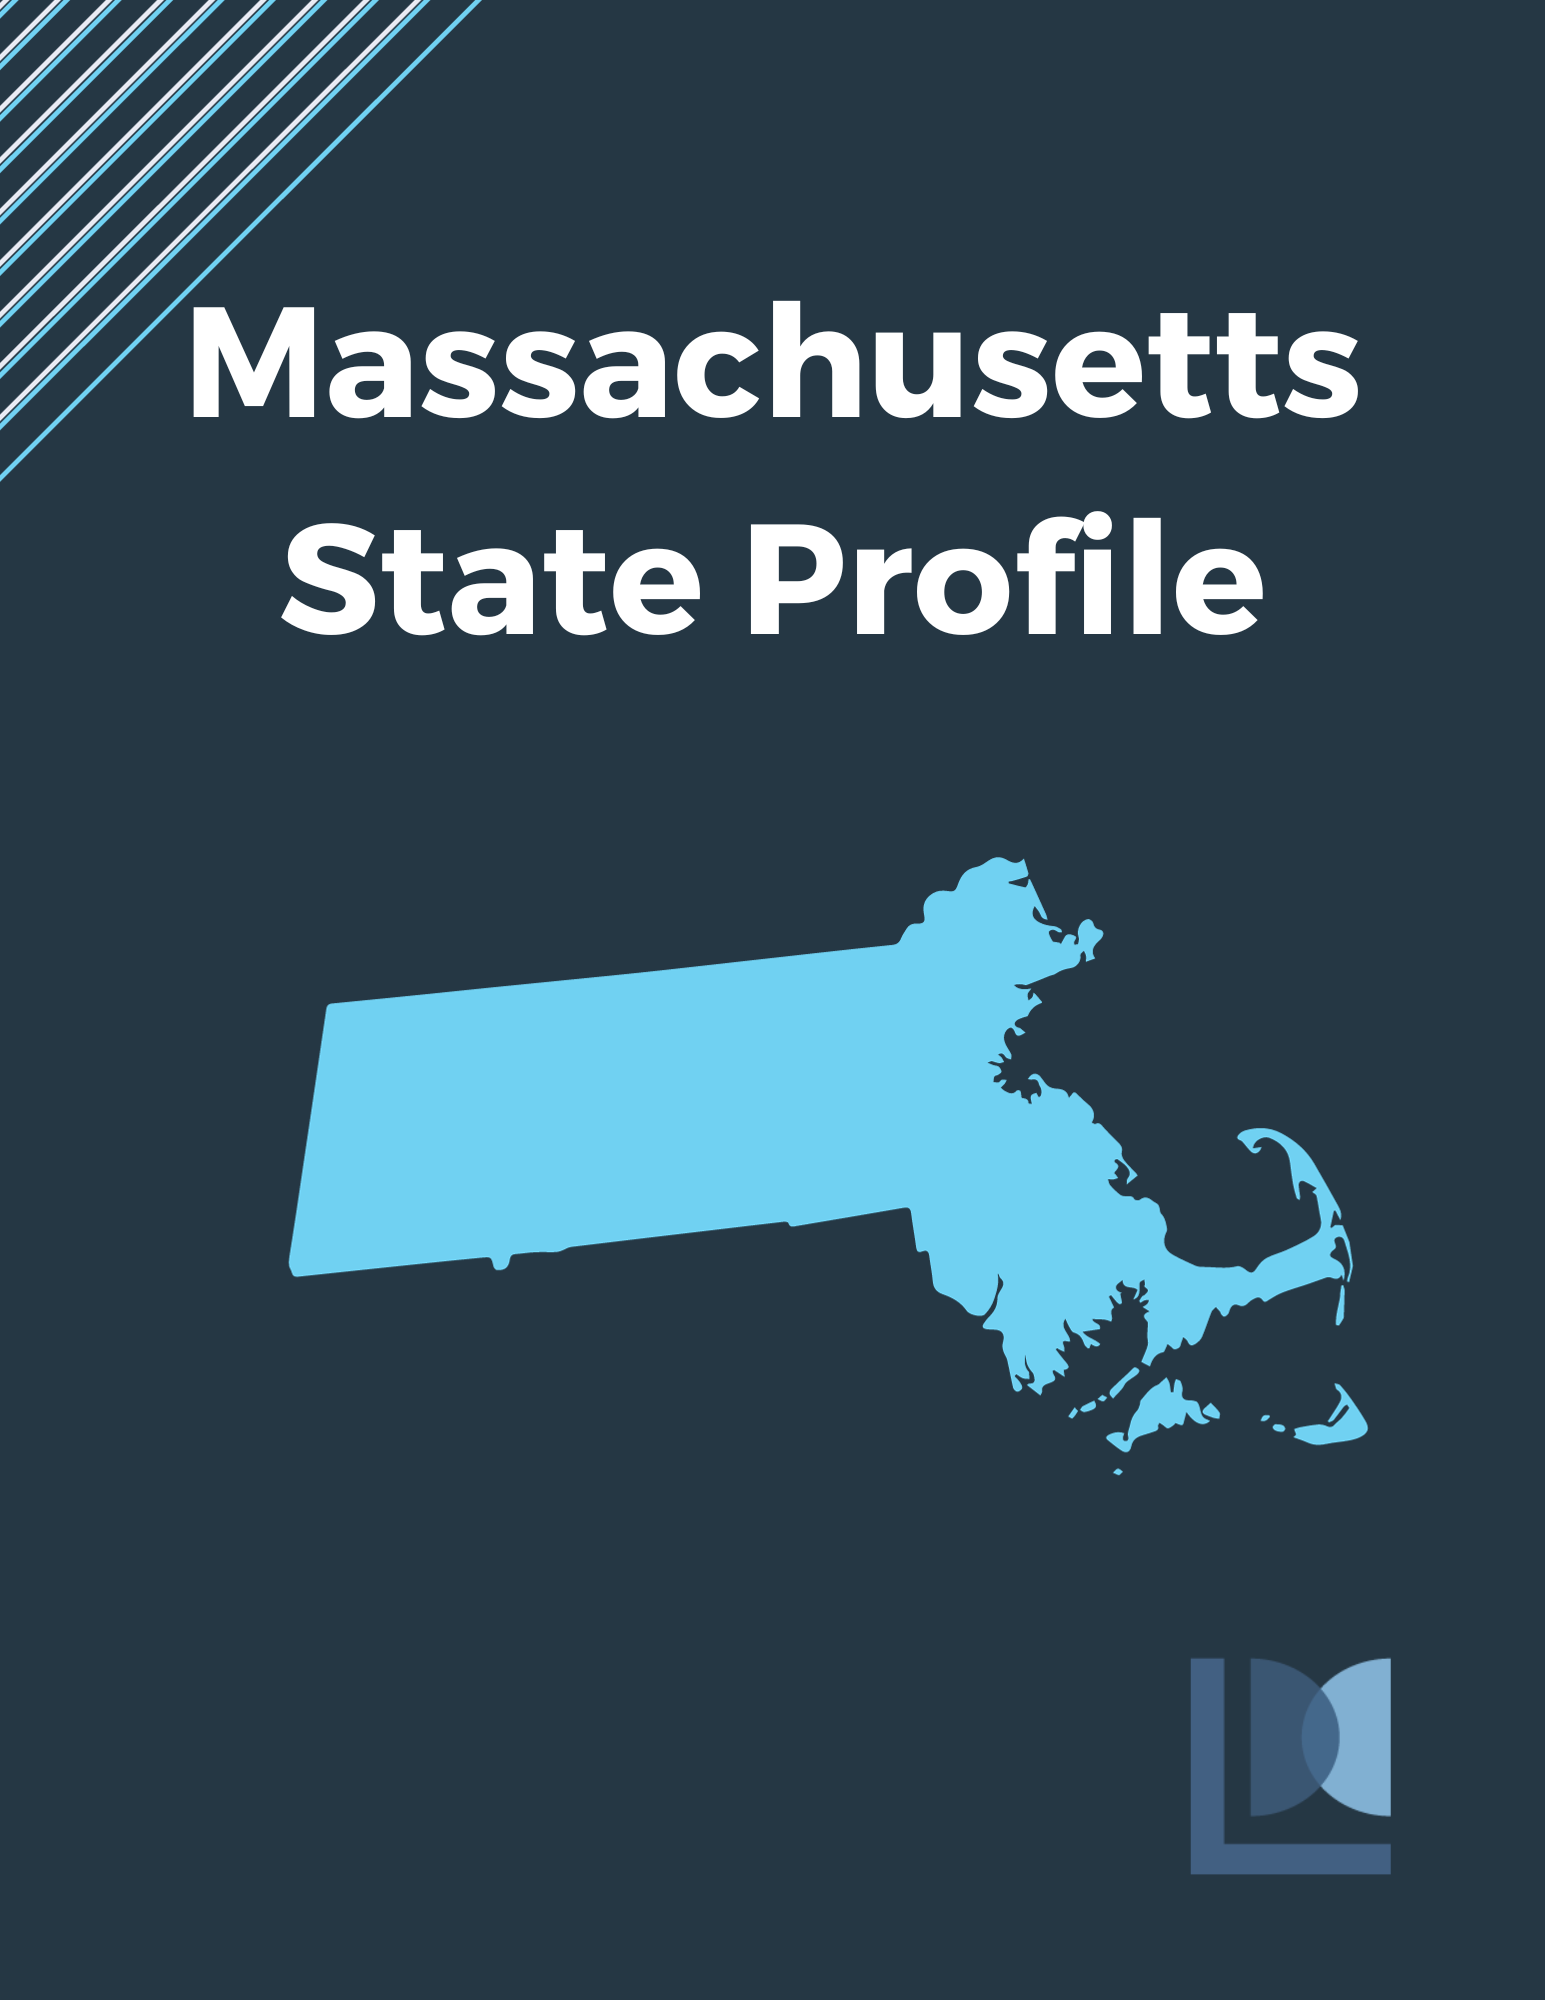 Massachusetts State Profile (Copy)